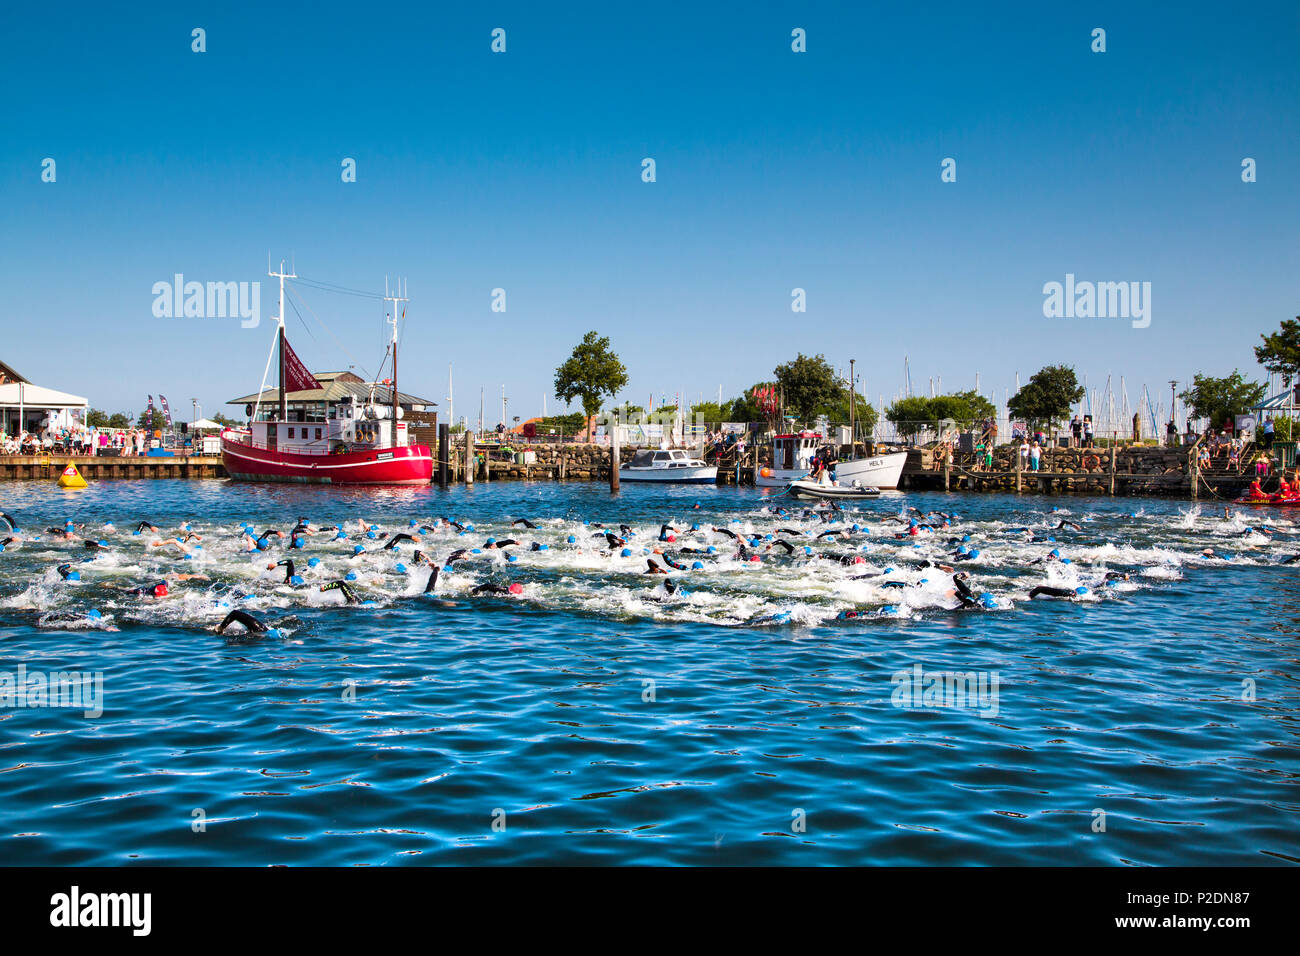 La gente di nuoto nel porto, triathlon, Heiligenhafen, costa baltica, Schleswig-Holstein, Germania Foto Stock